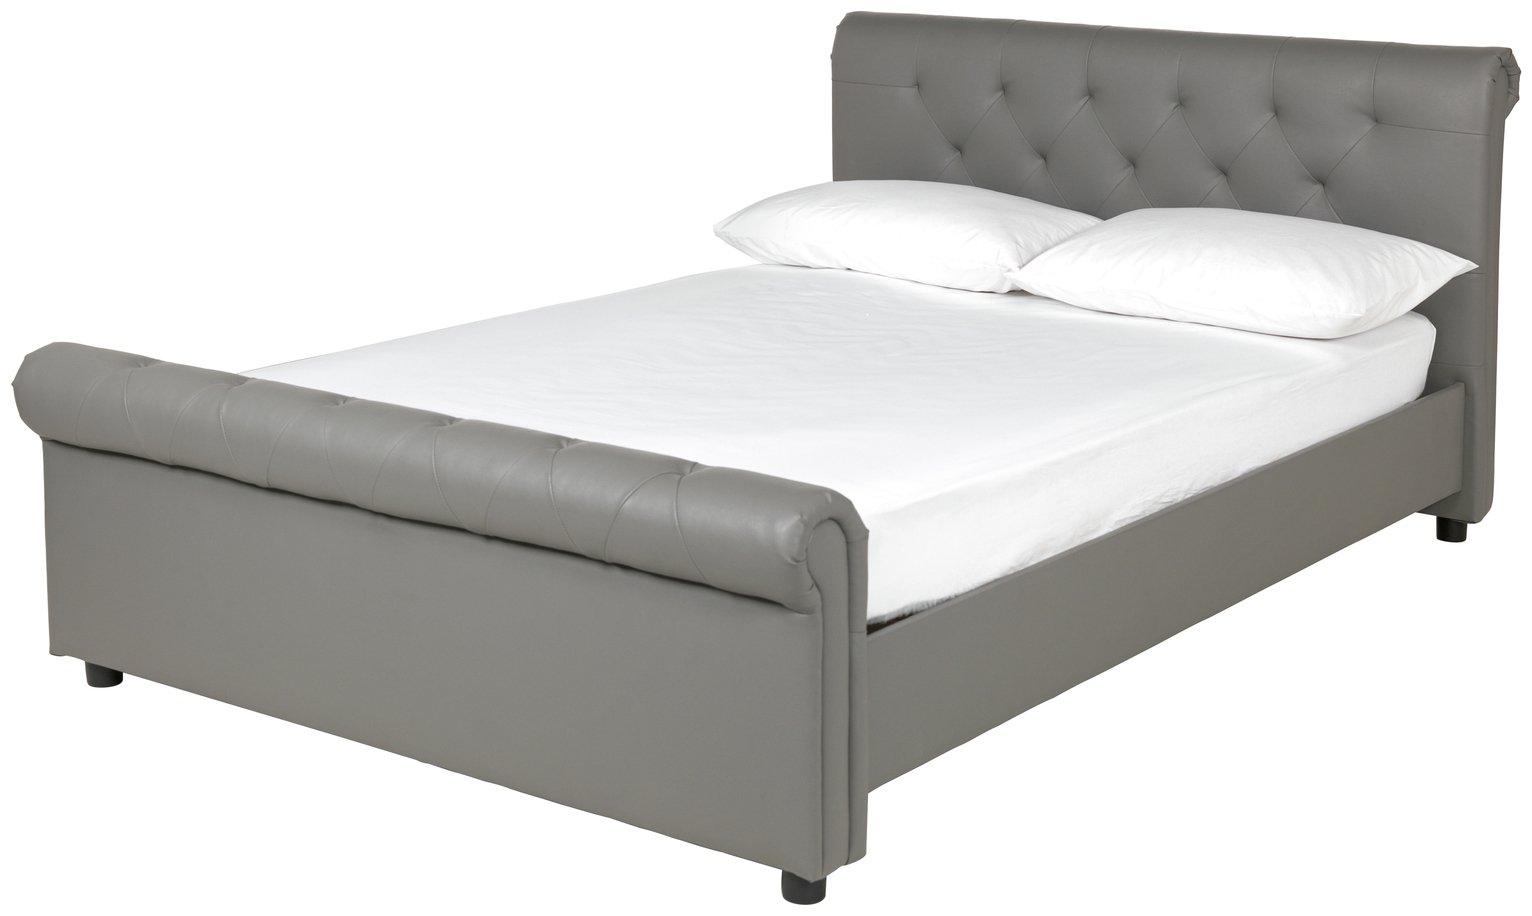 Argos Home Hayford Double Bed Frame - Grey